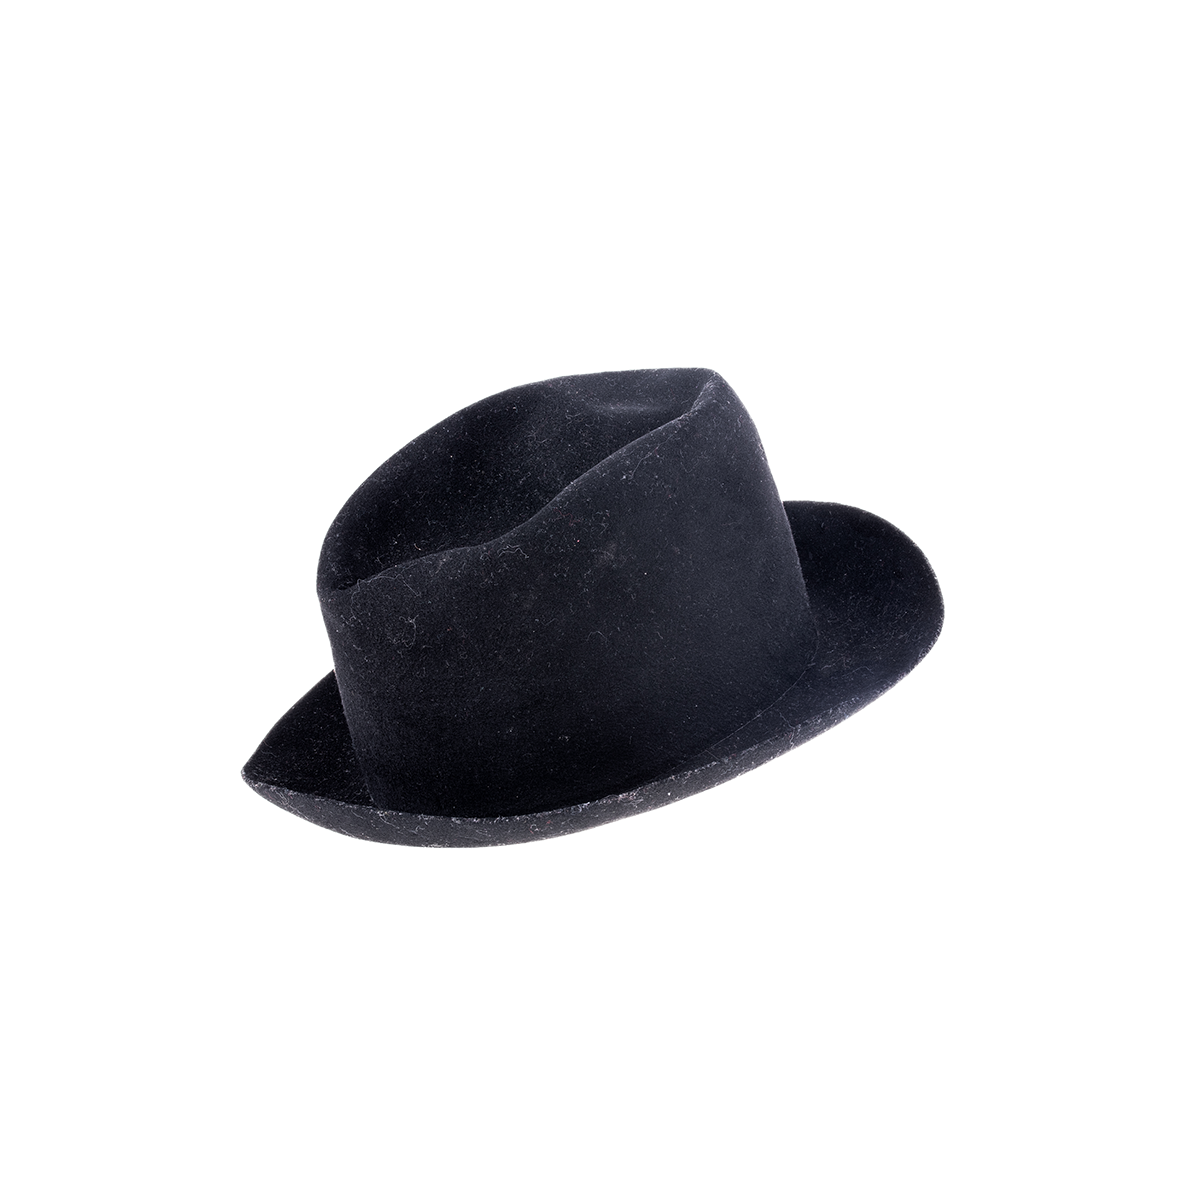 Vajdův klobouk